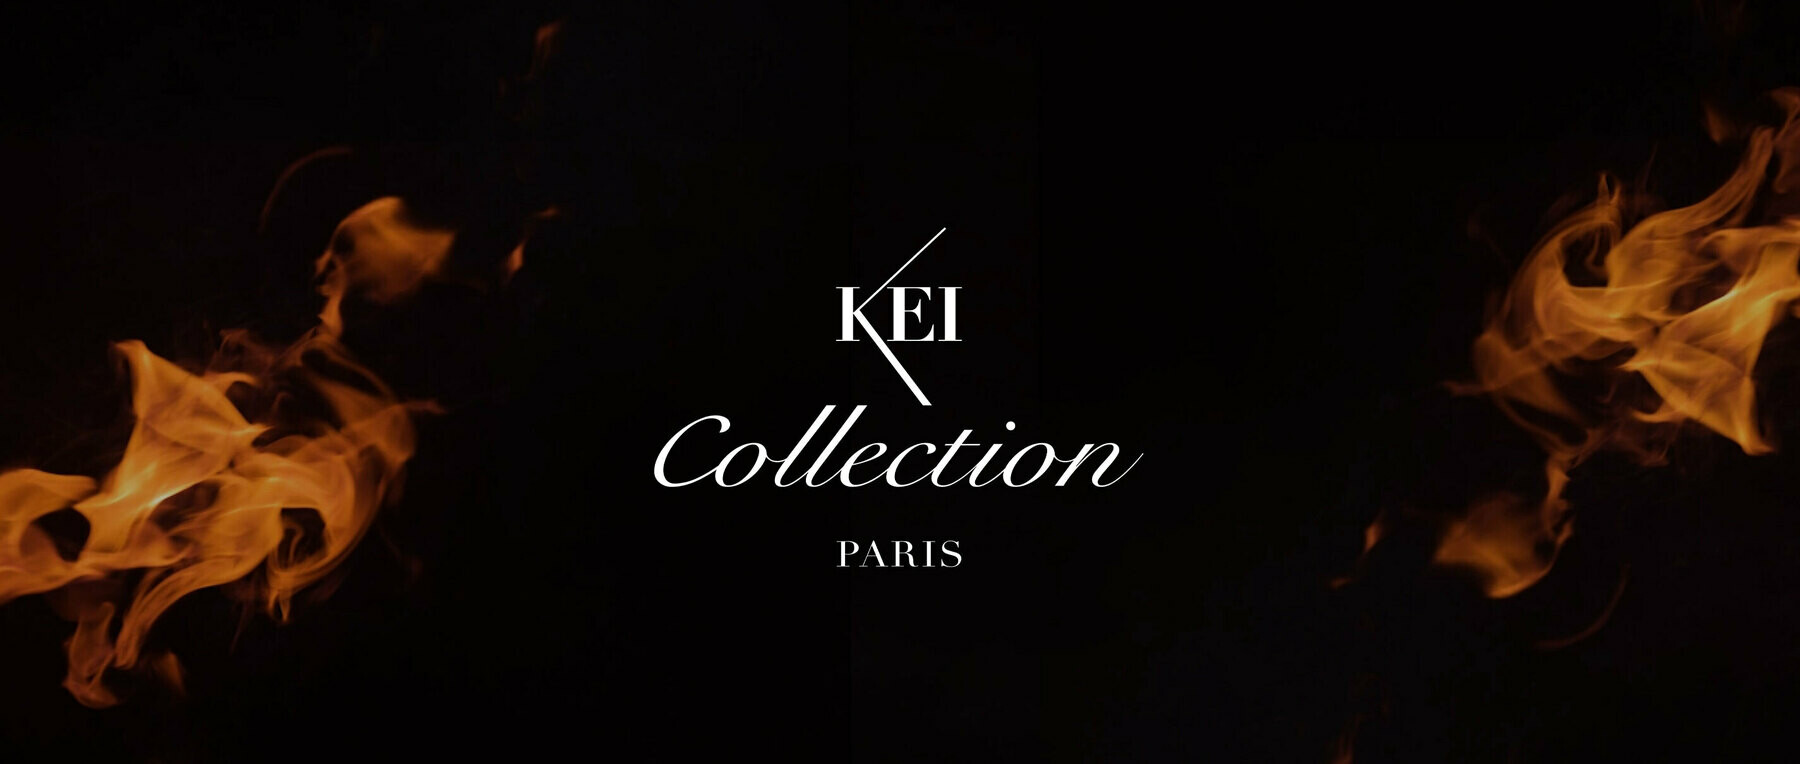 KEI Collection PARISの1枚目のカバー画像